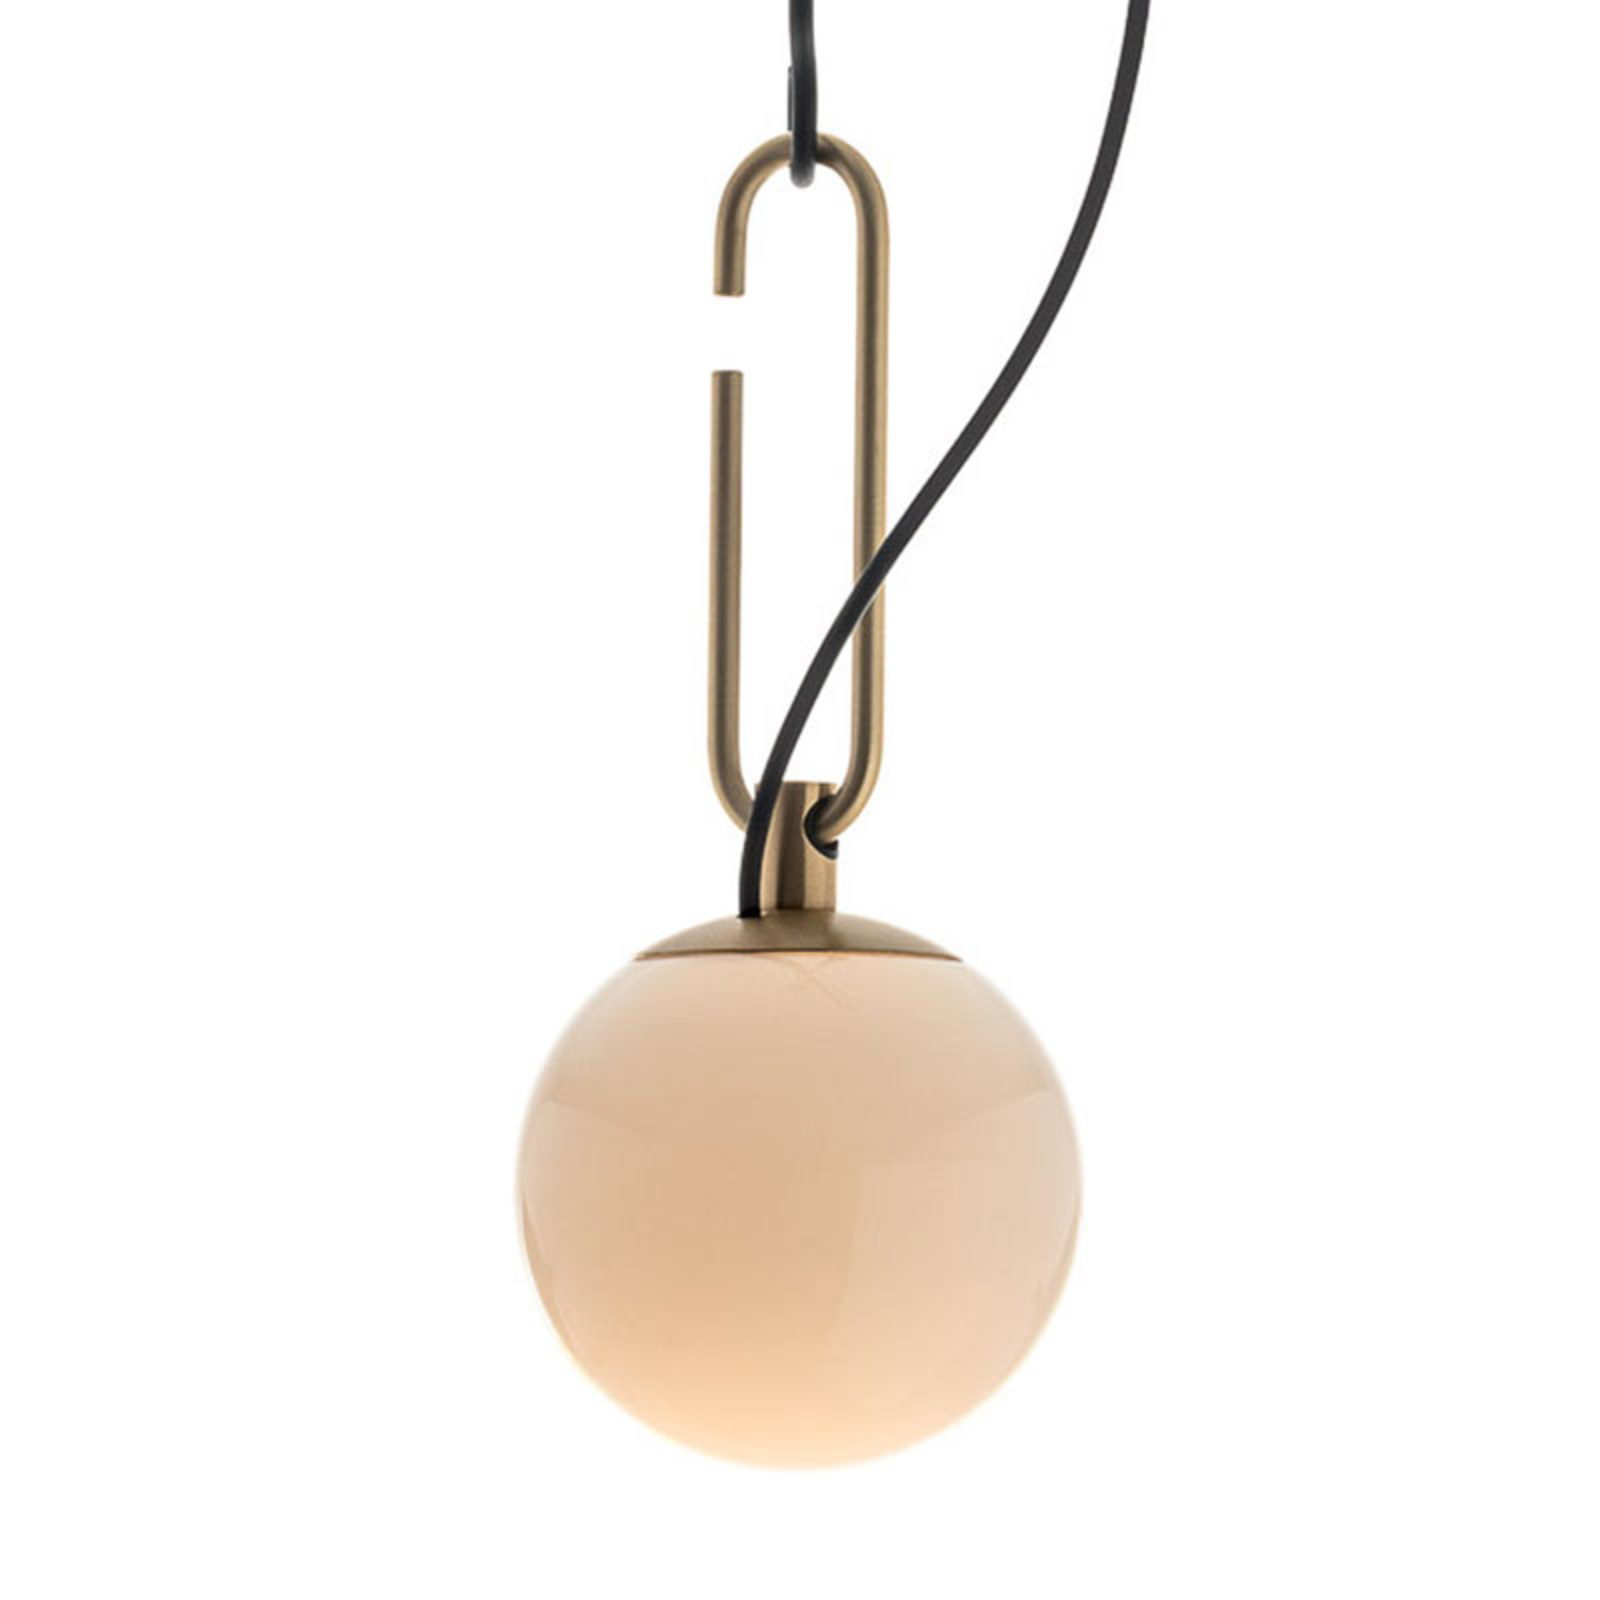 Artemide nh glazen hanglamp, Ø 14 cm